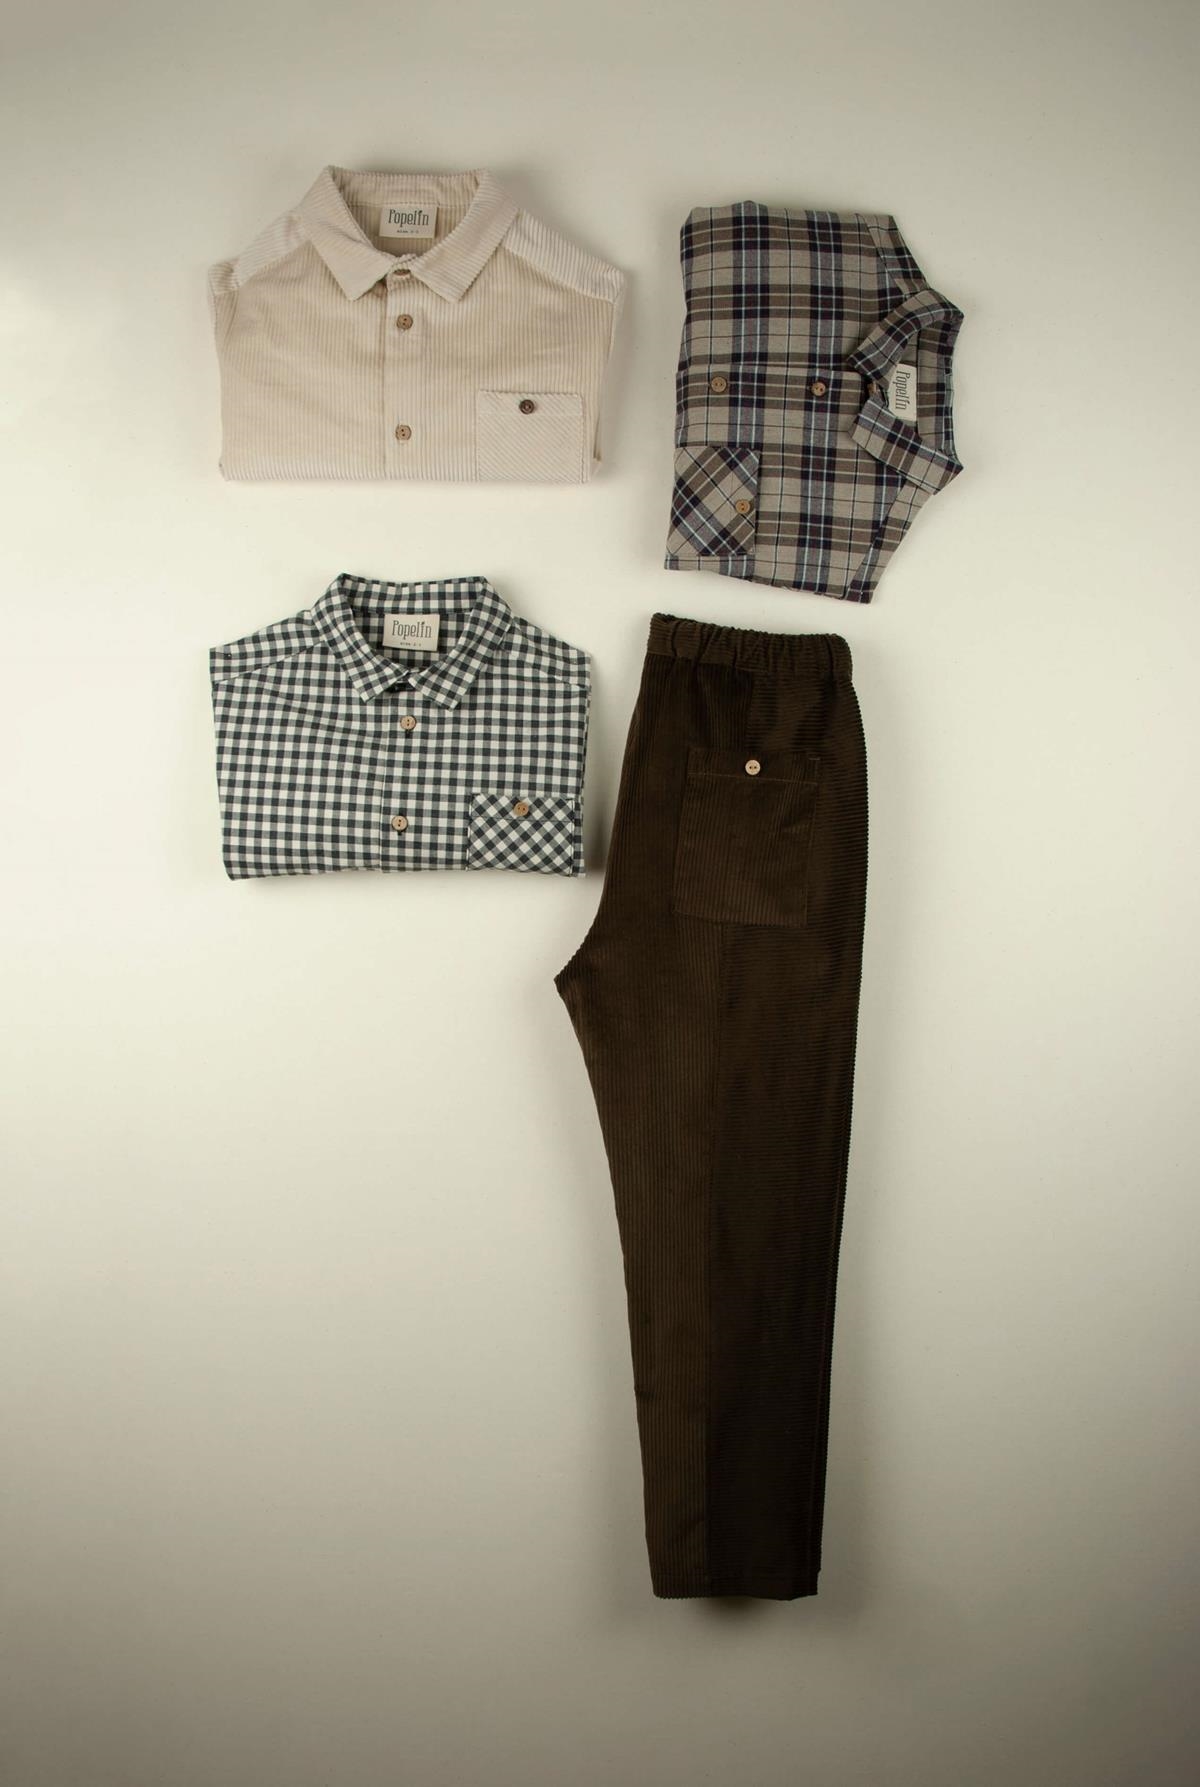 Mod.21.3 Chocolate-coloured trousers | AW21.22 Mod.21.3 Chocolate-coloured trousers | 1